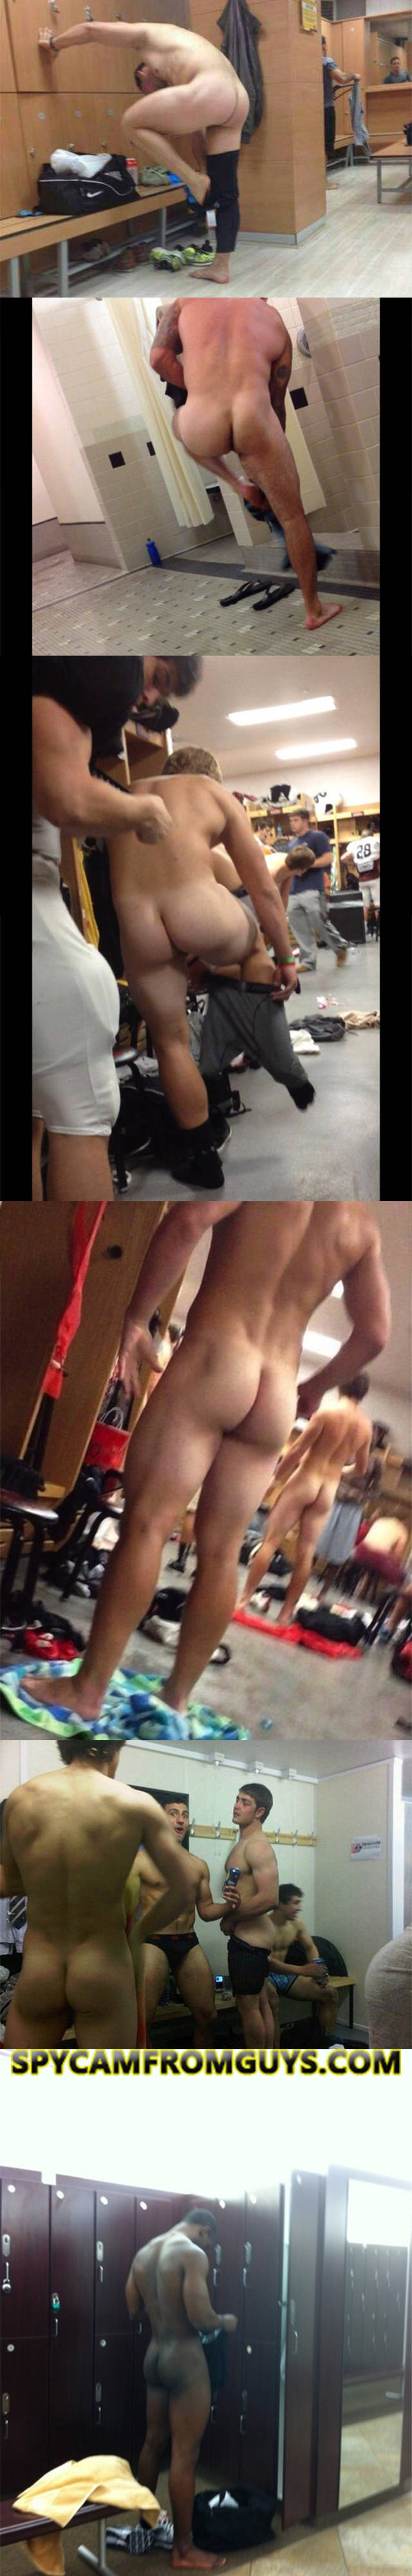 spycam guys caught naked lockerroom